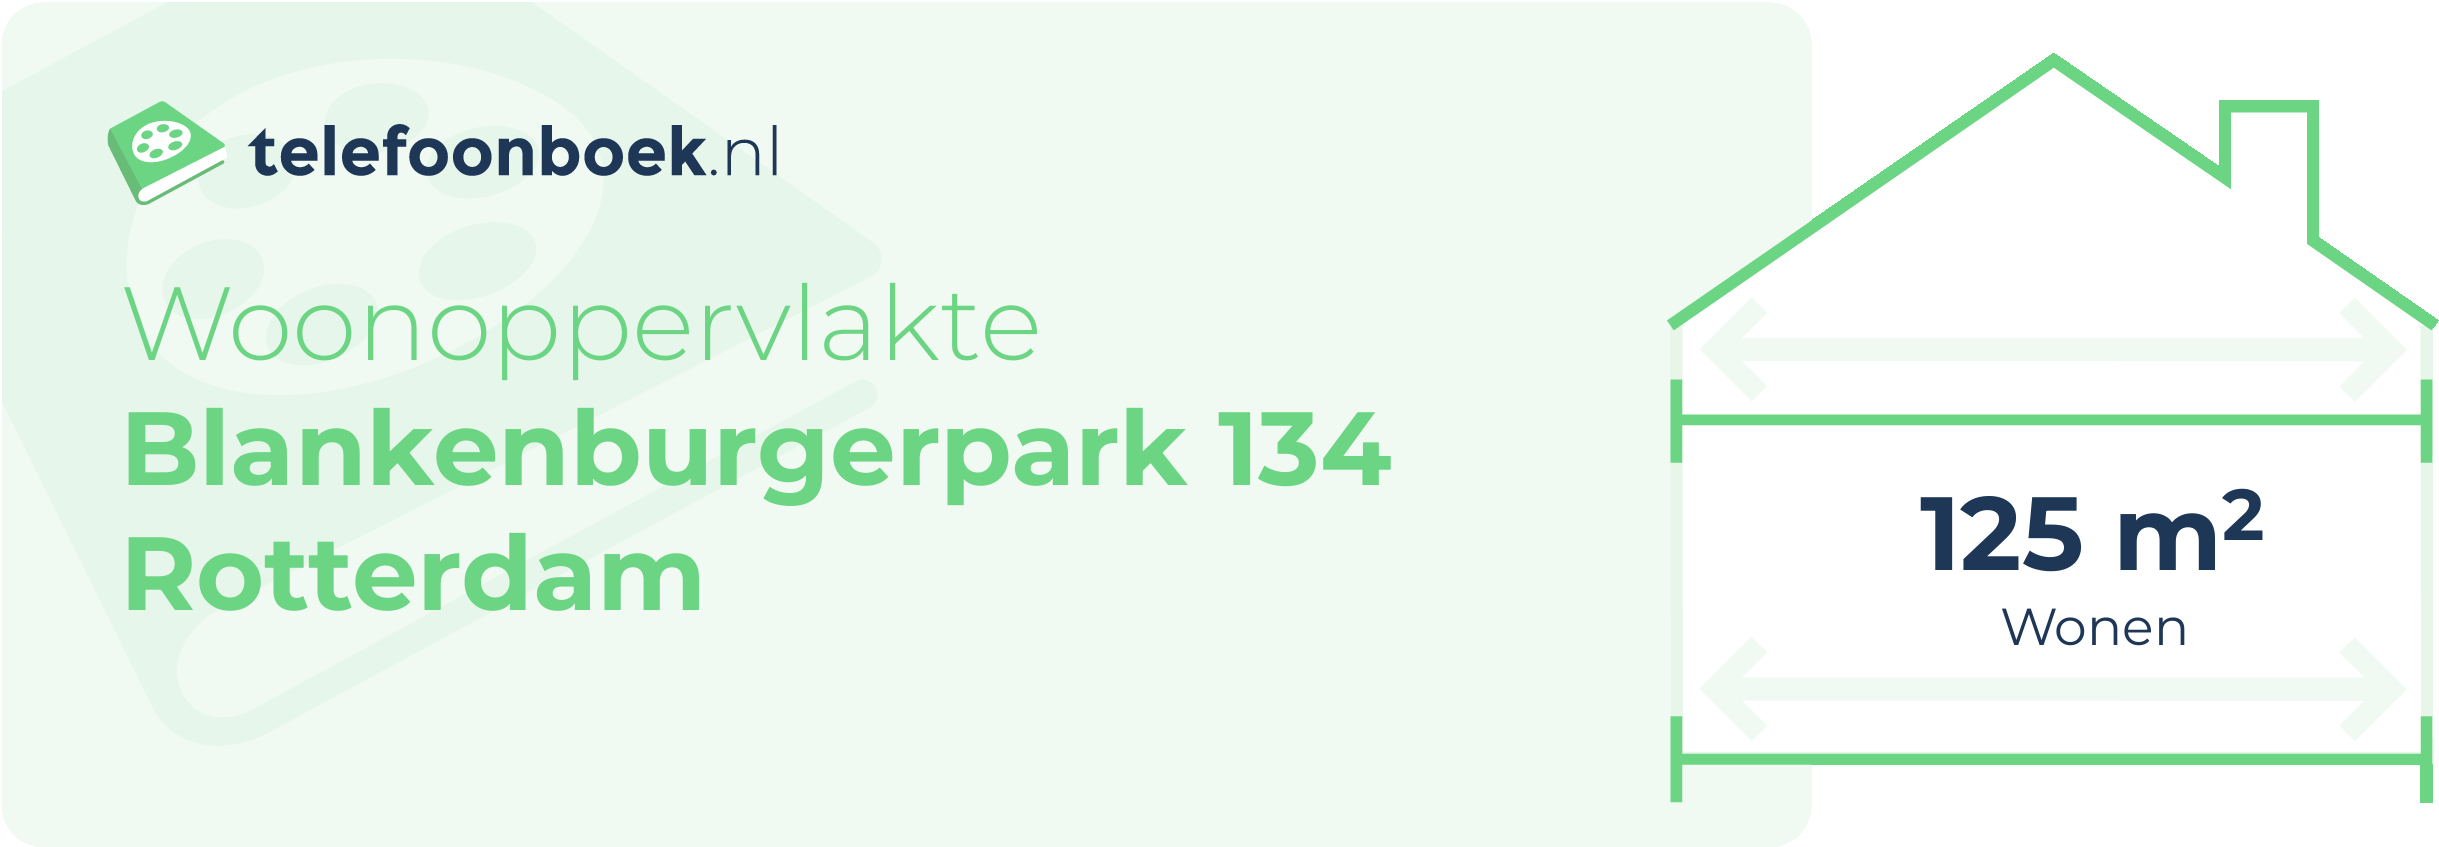 Woonoppervlakte Blankenburgerpark 134 Rotterdam